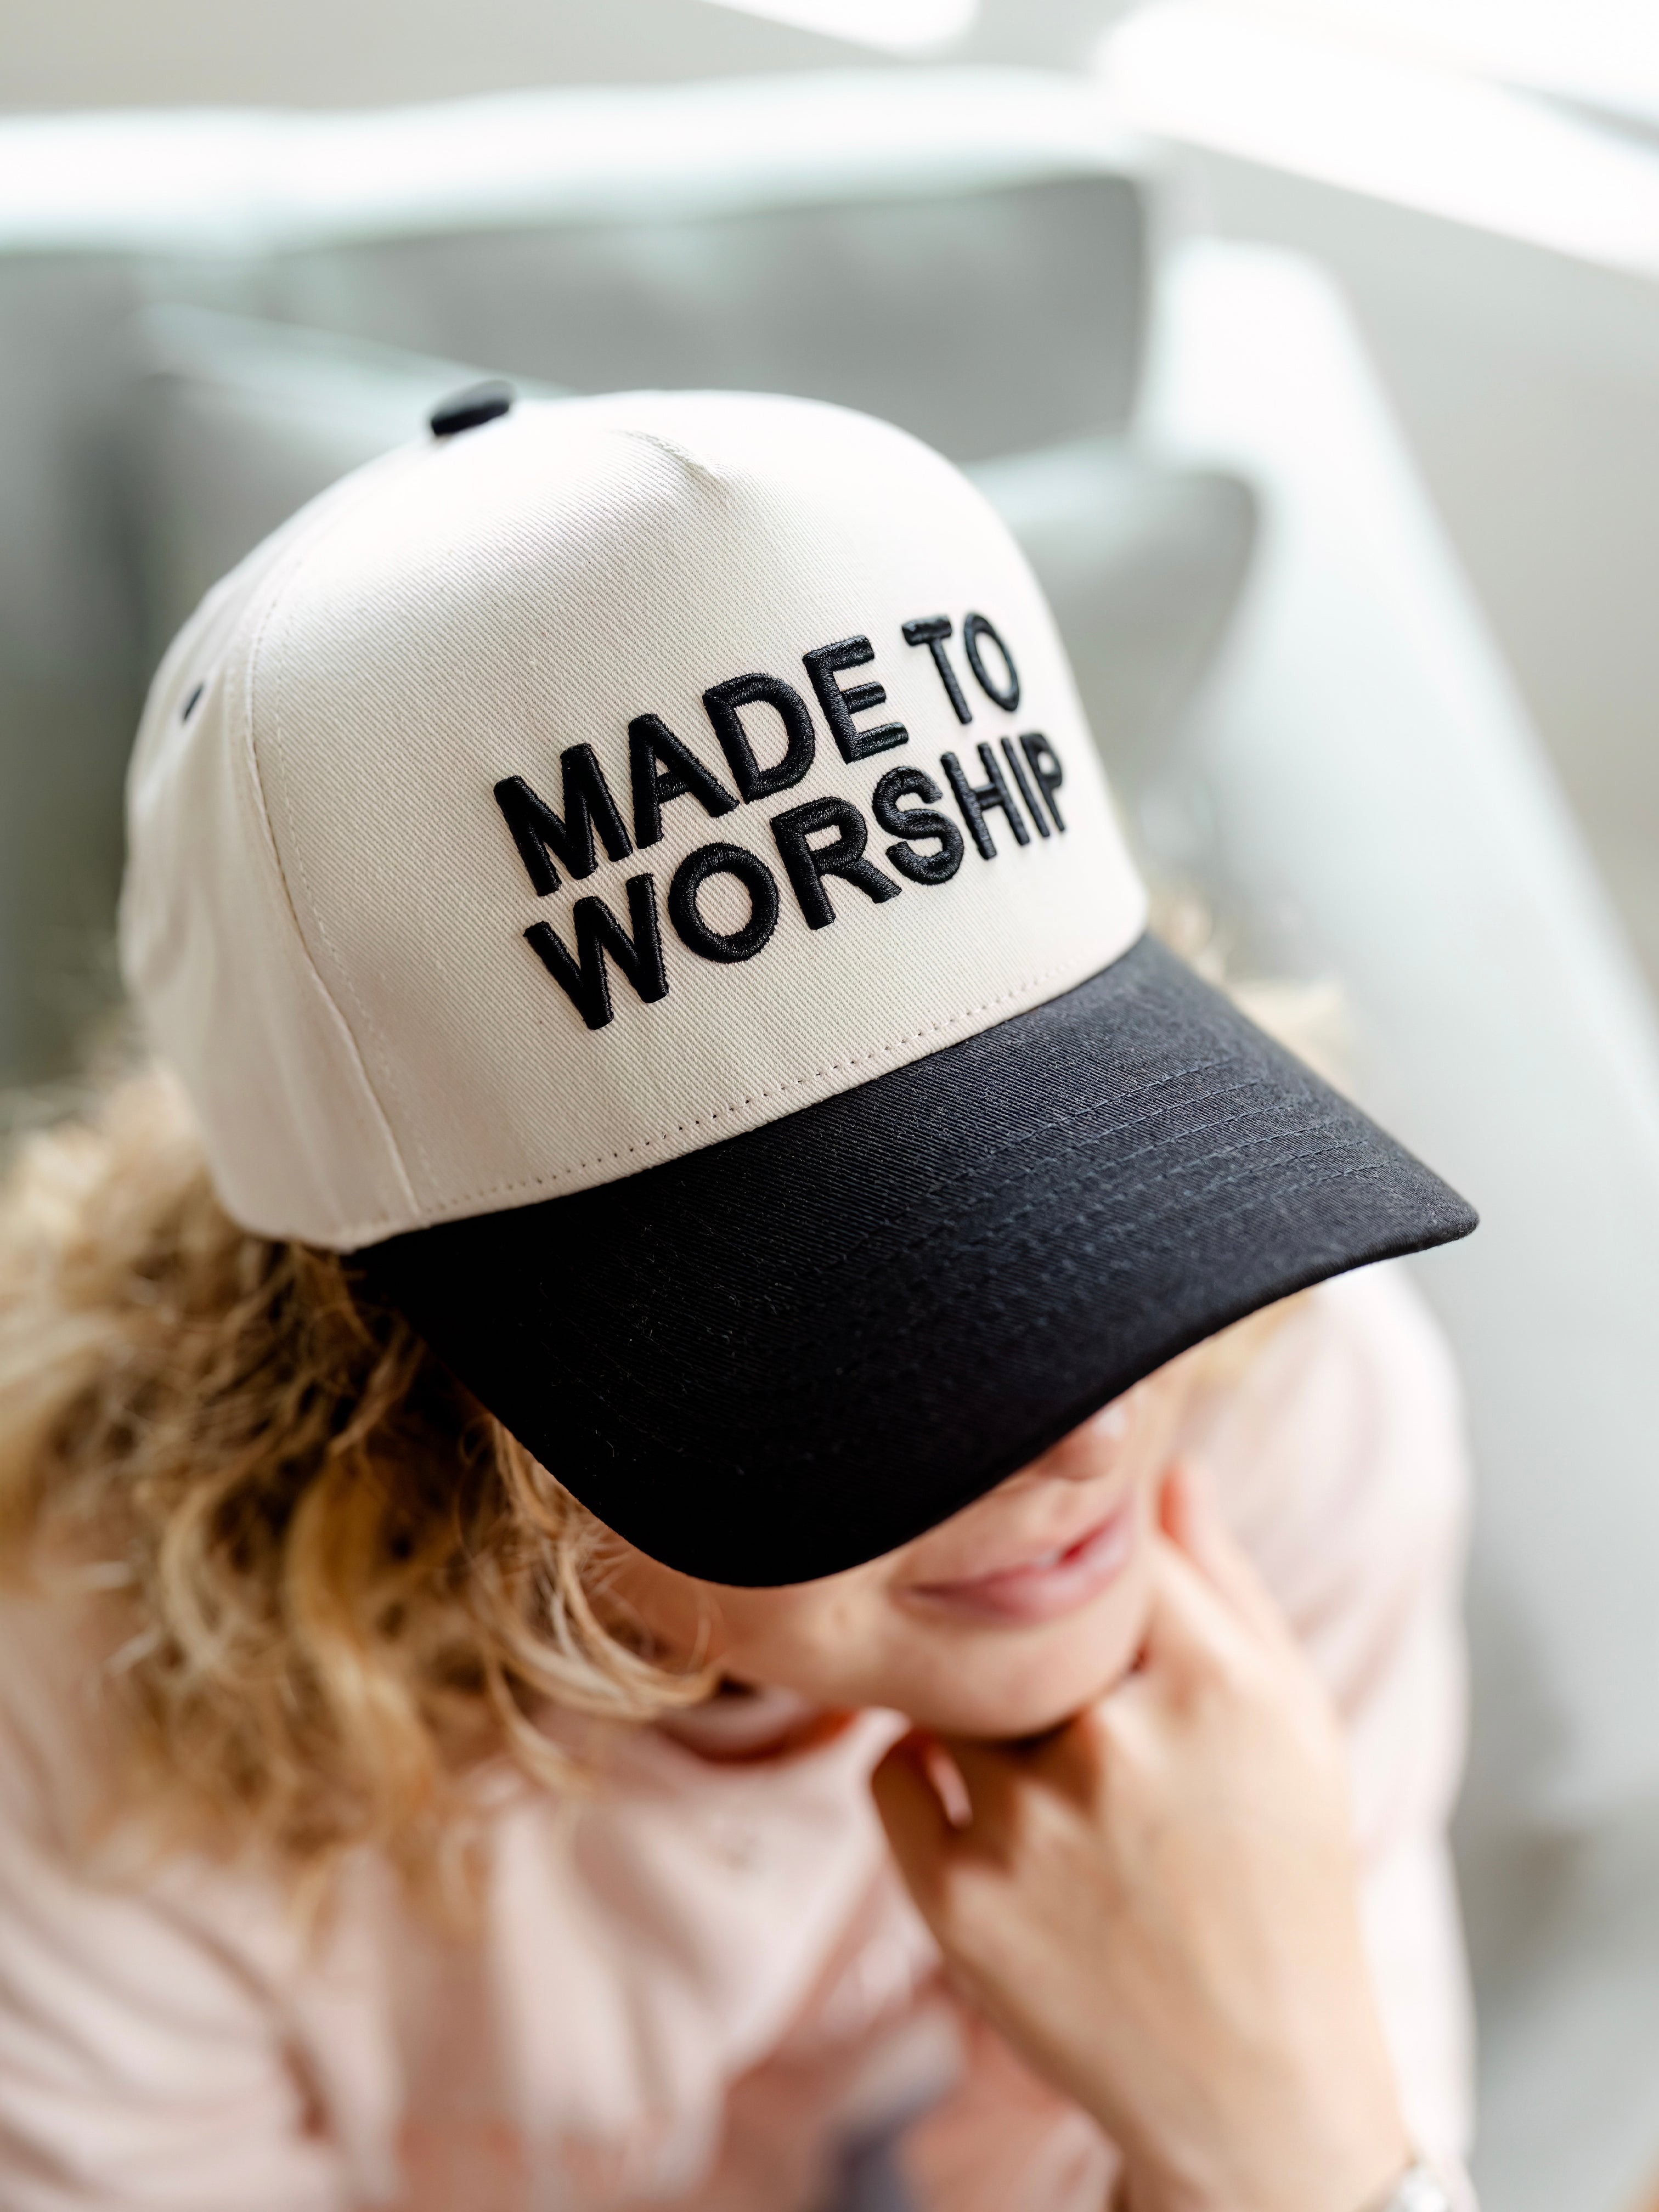 Hat: Made to worship